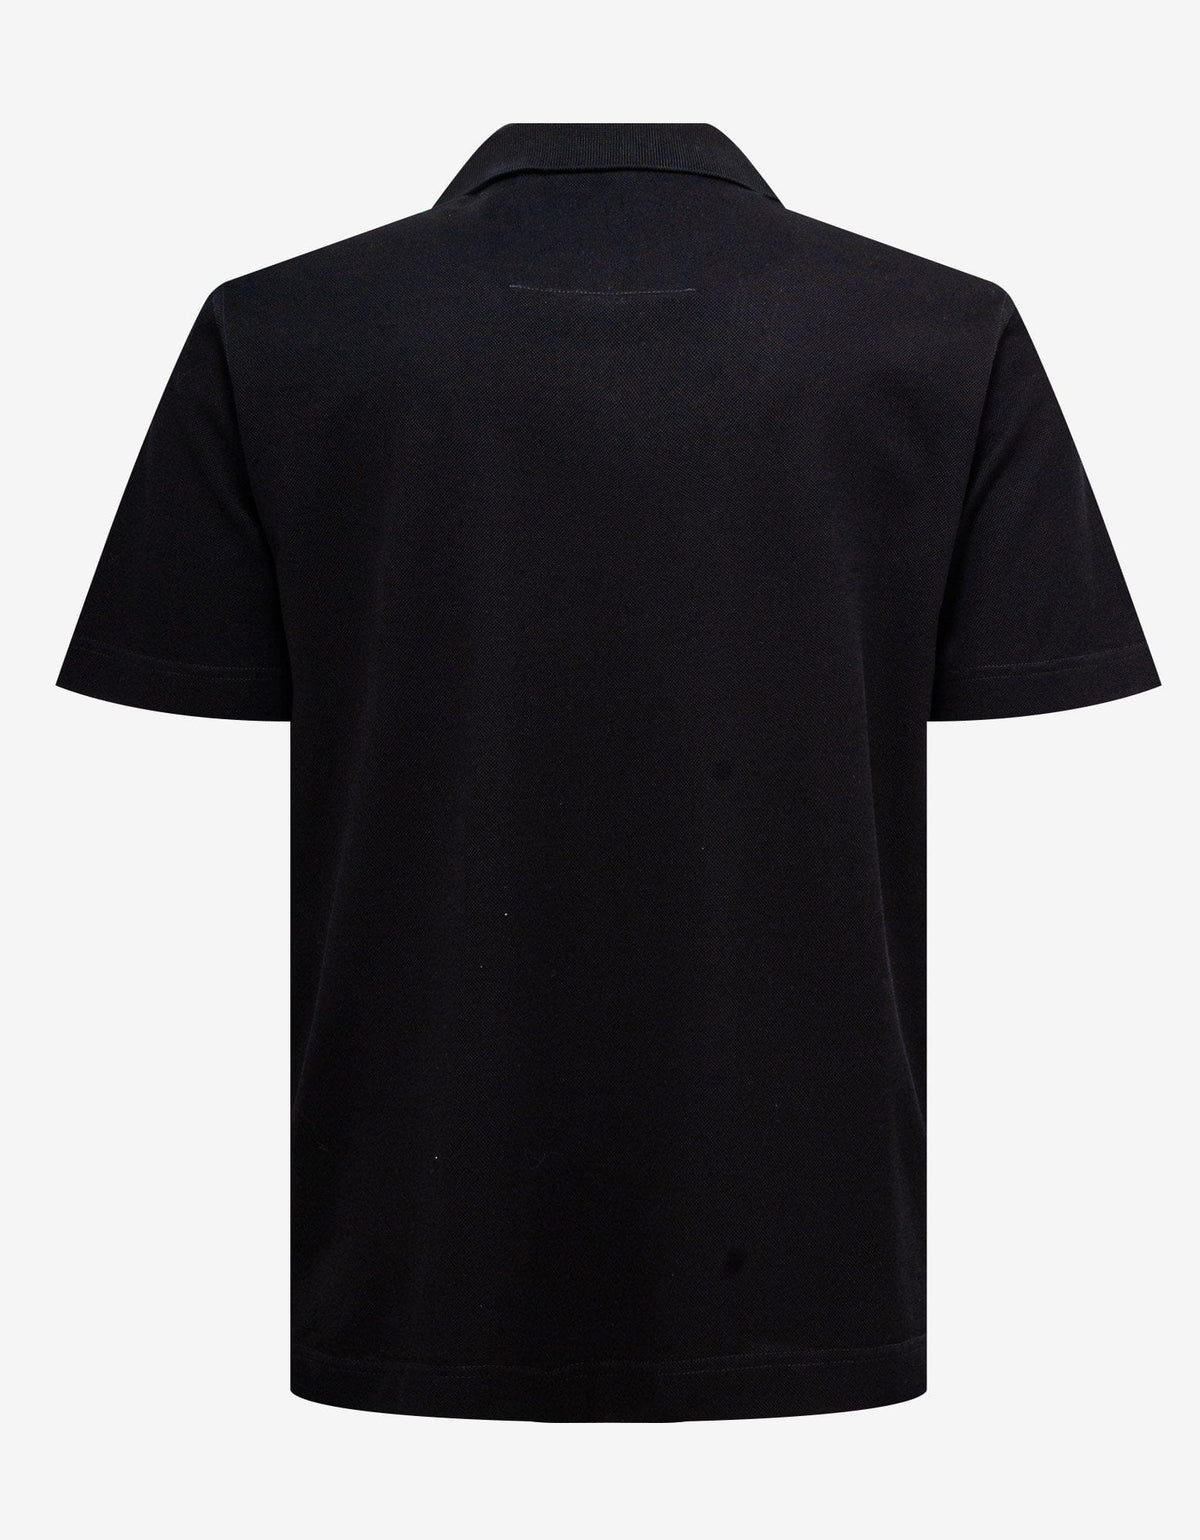 Givenchy Givenchy Black Archetype Zipped Polo T-Shirt